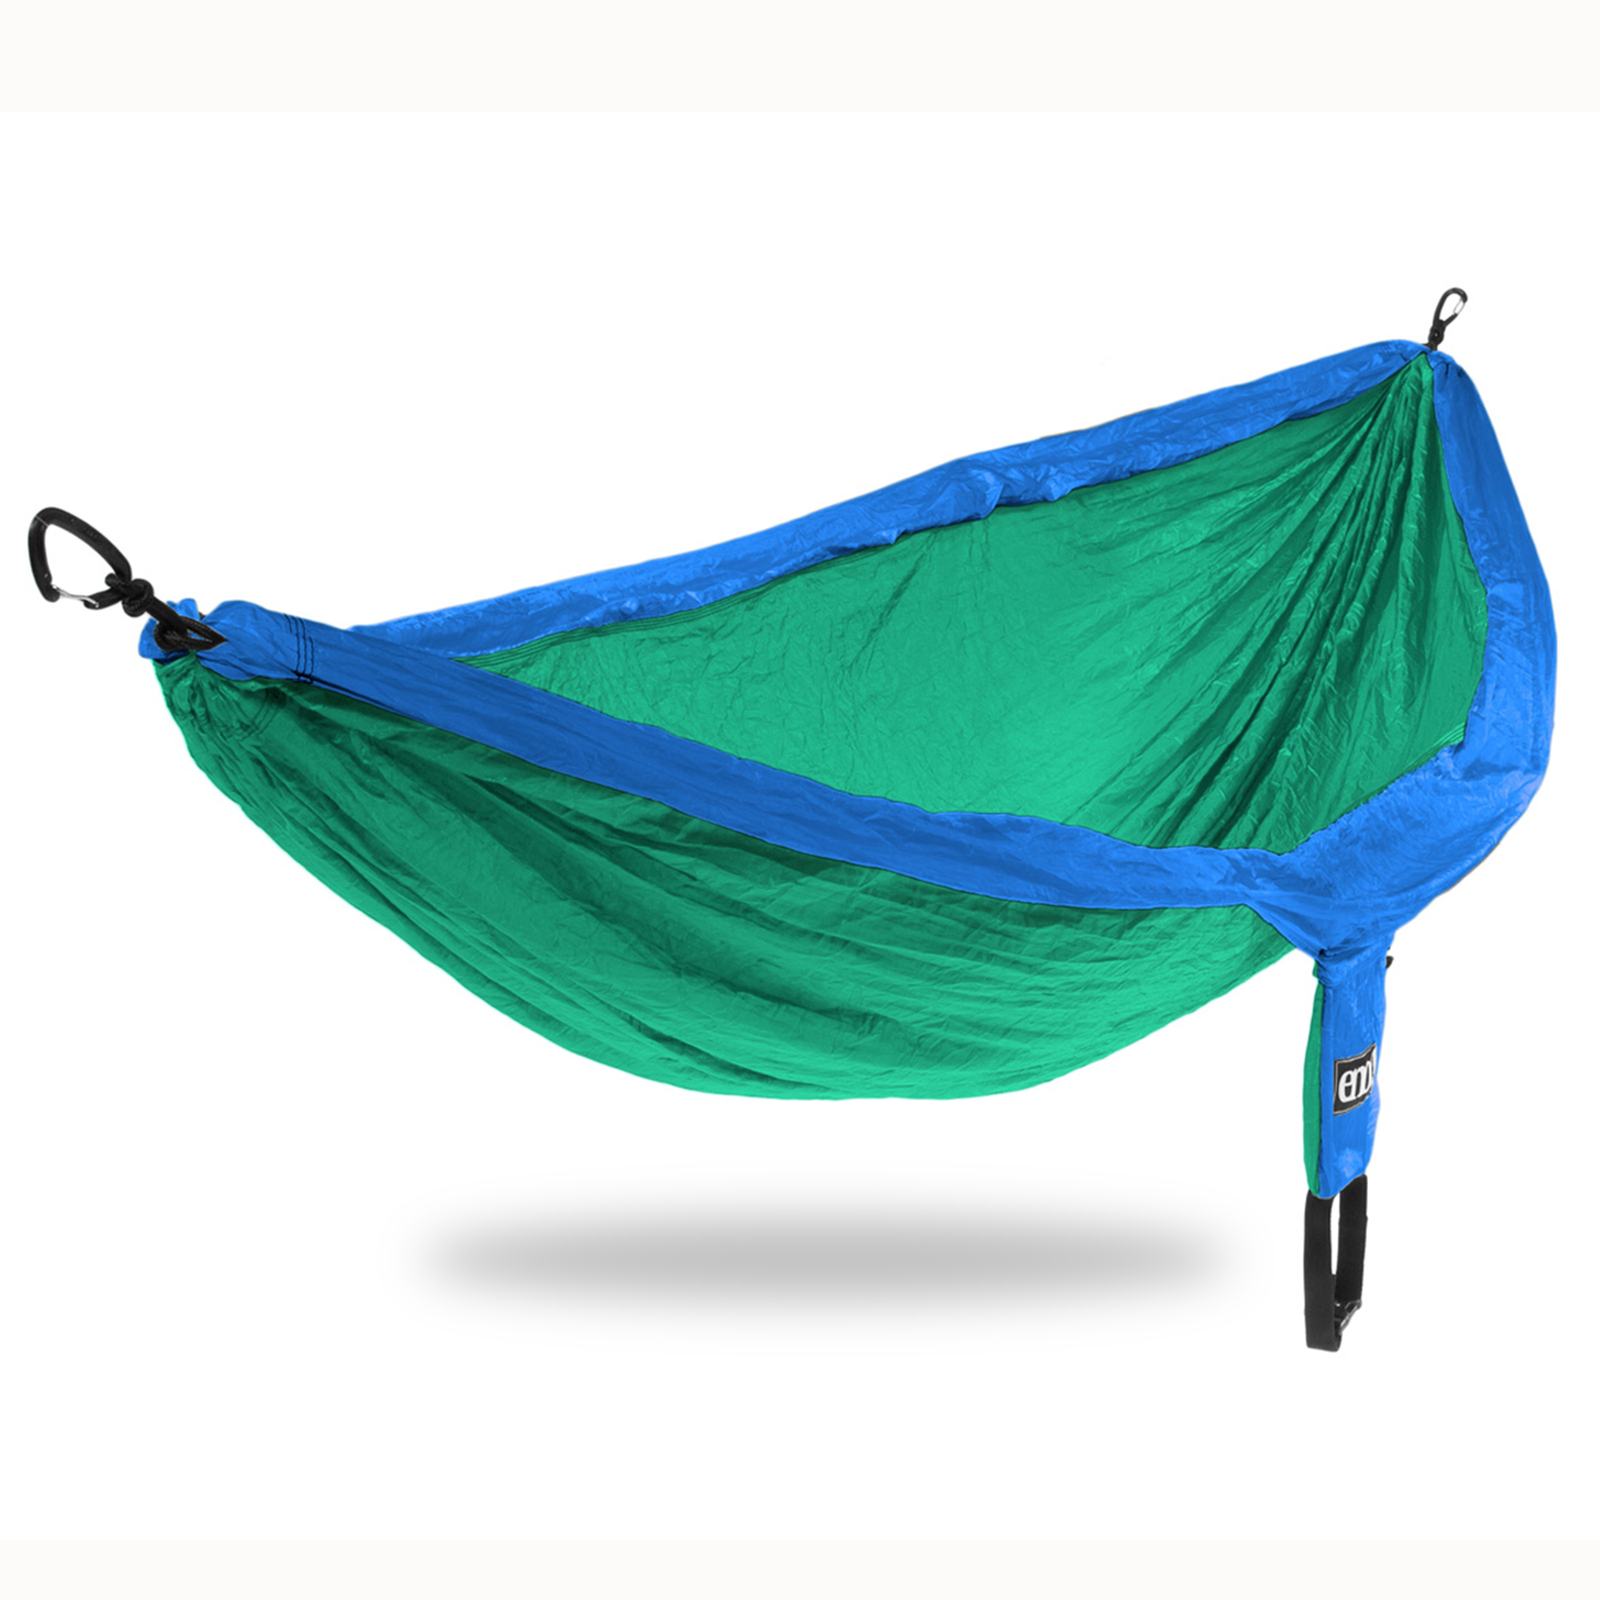 the green hammock